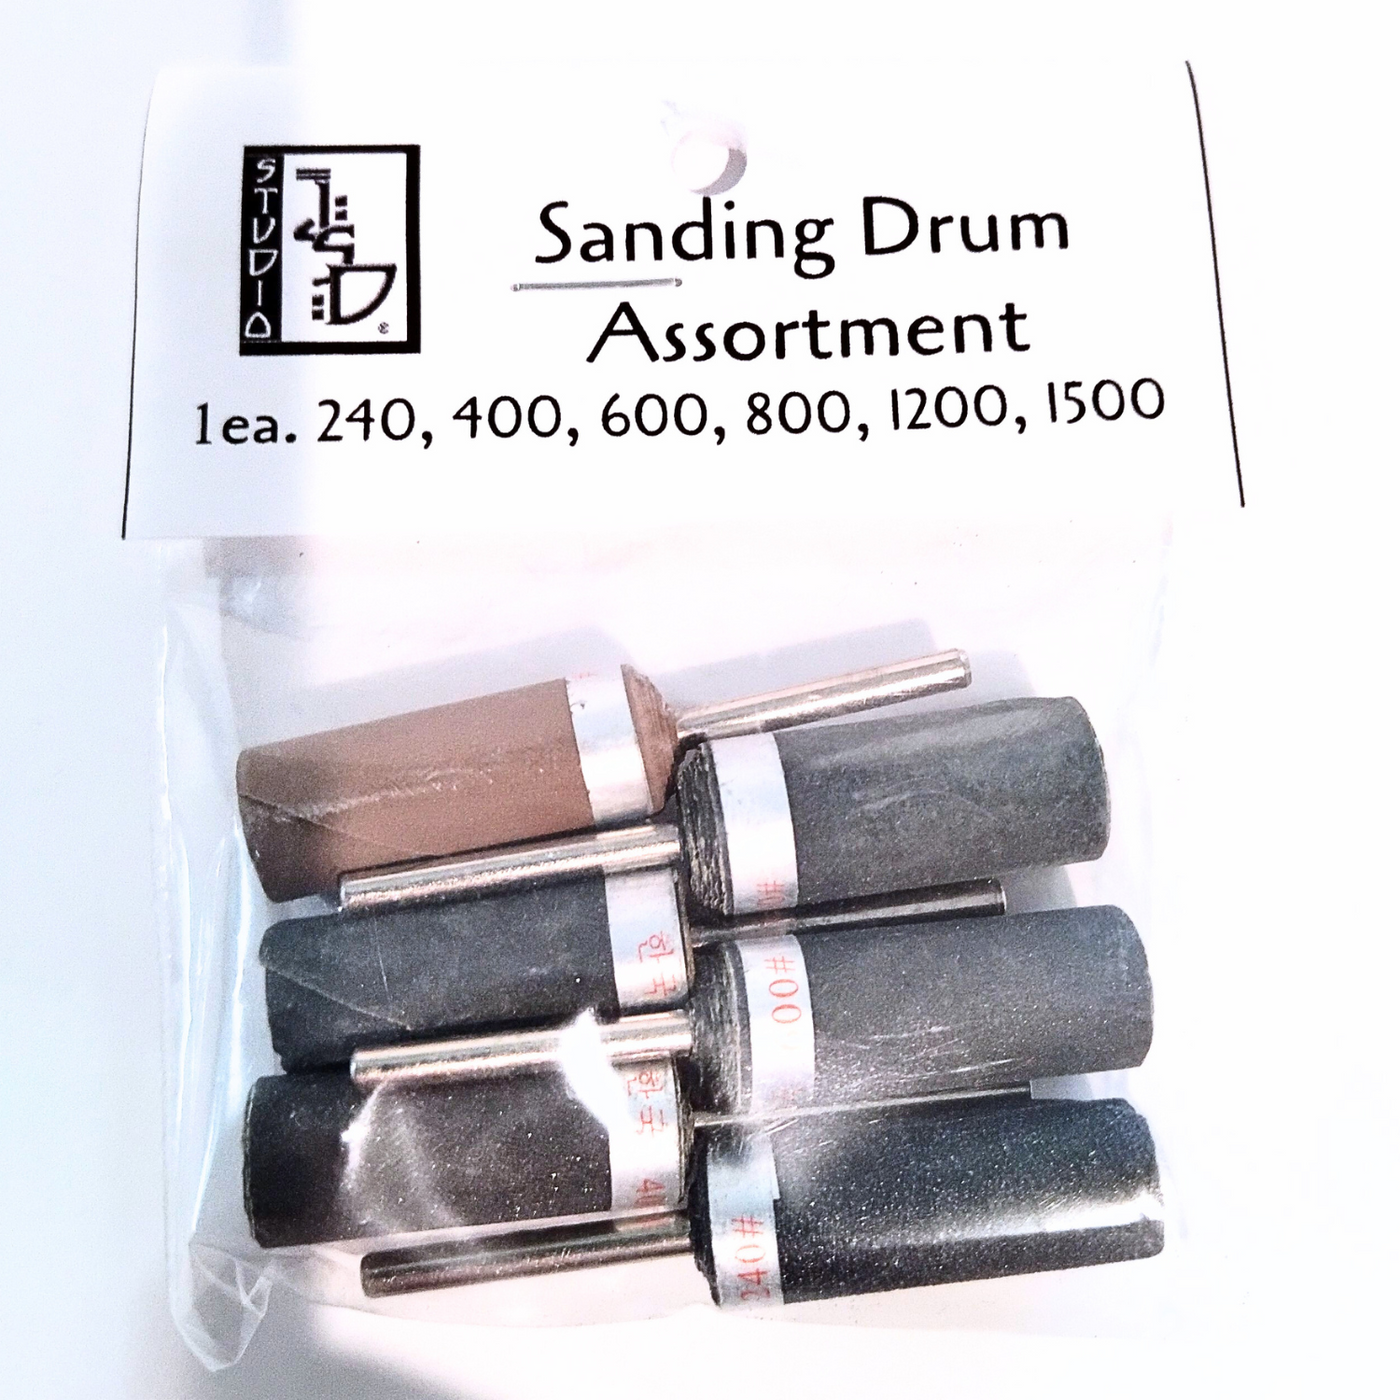 Sanding Drum Assortment 6 pcs